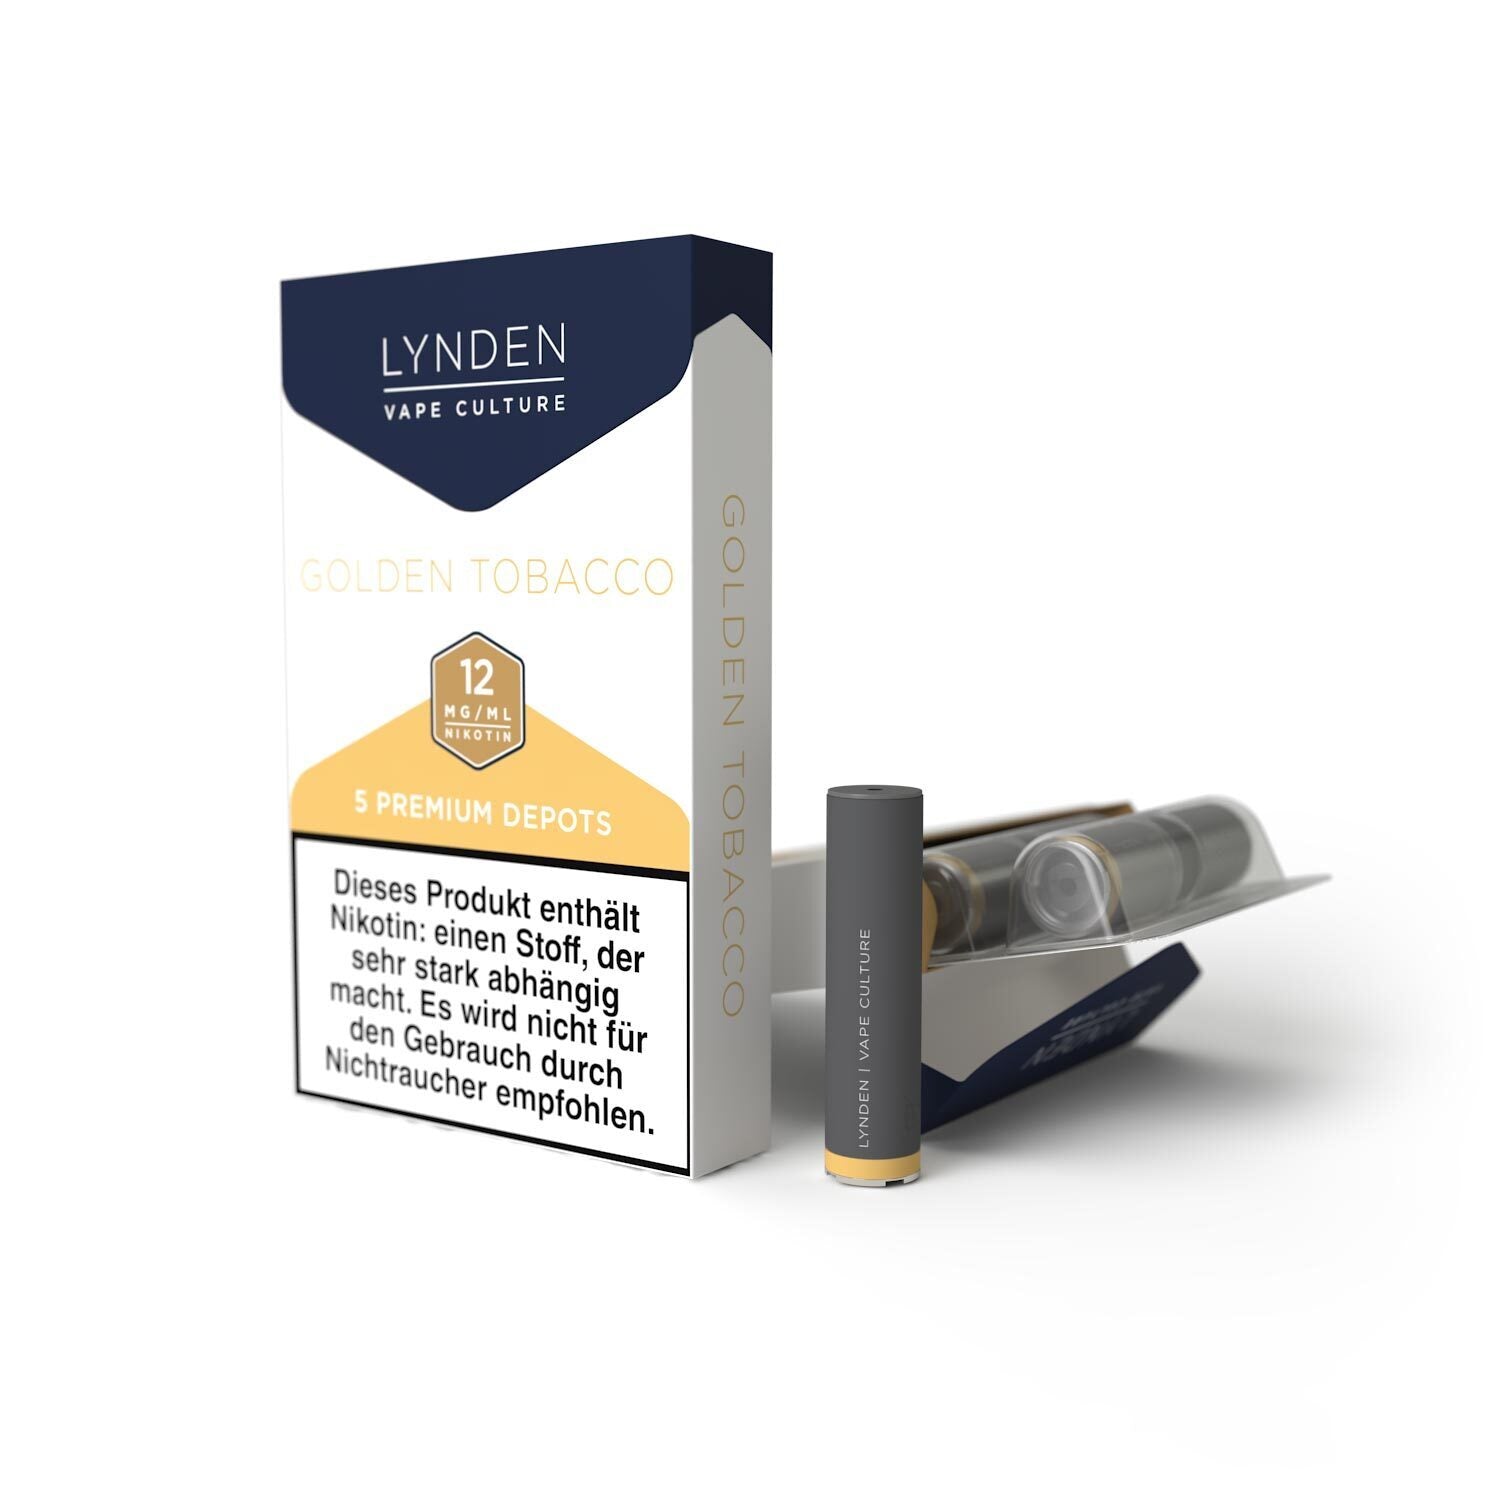 10er-Vorratspack LYNDEN Premium Depots Golden Tobacco mit 50 Depots